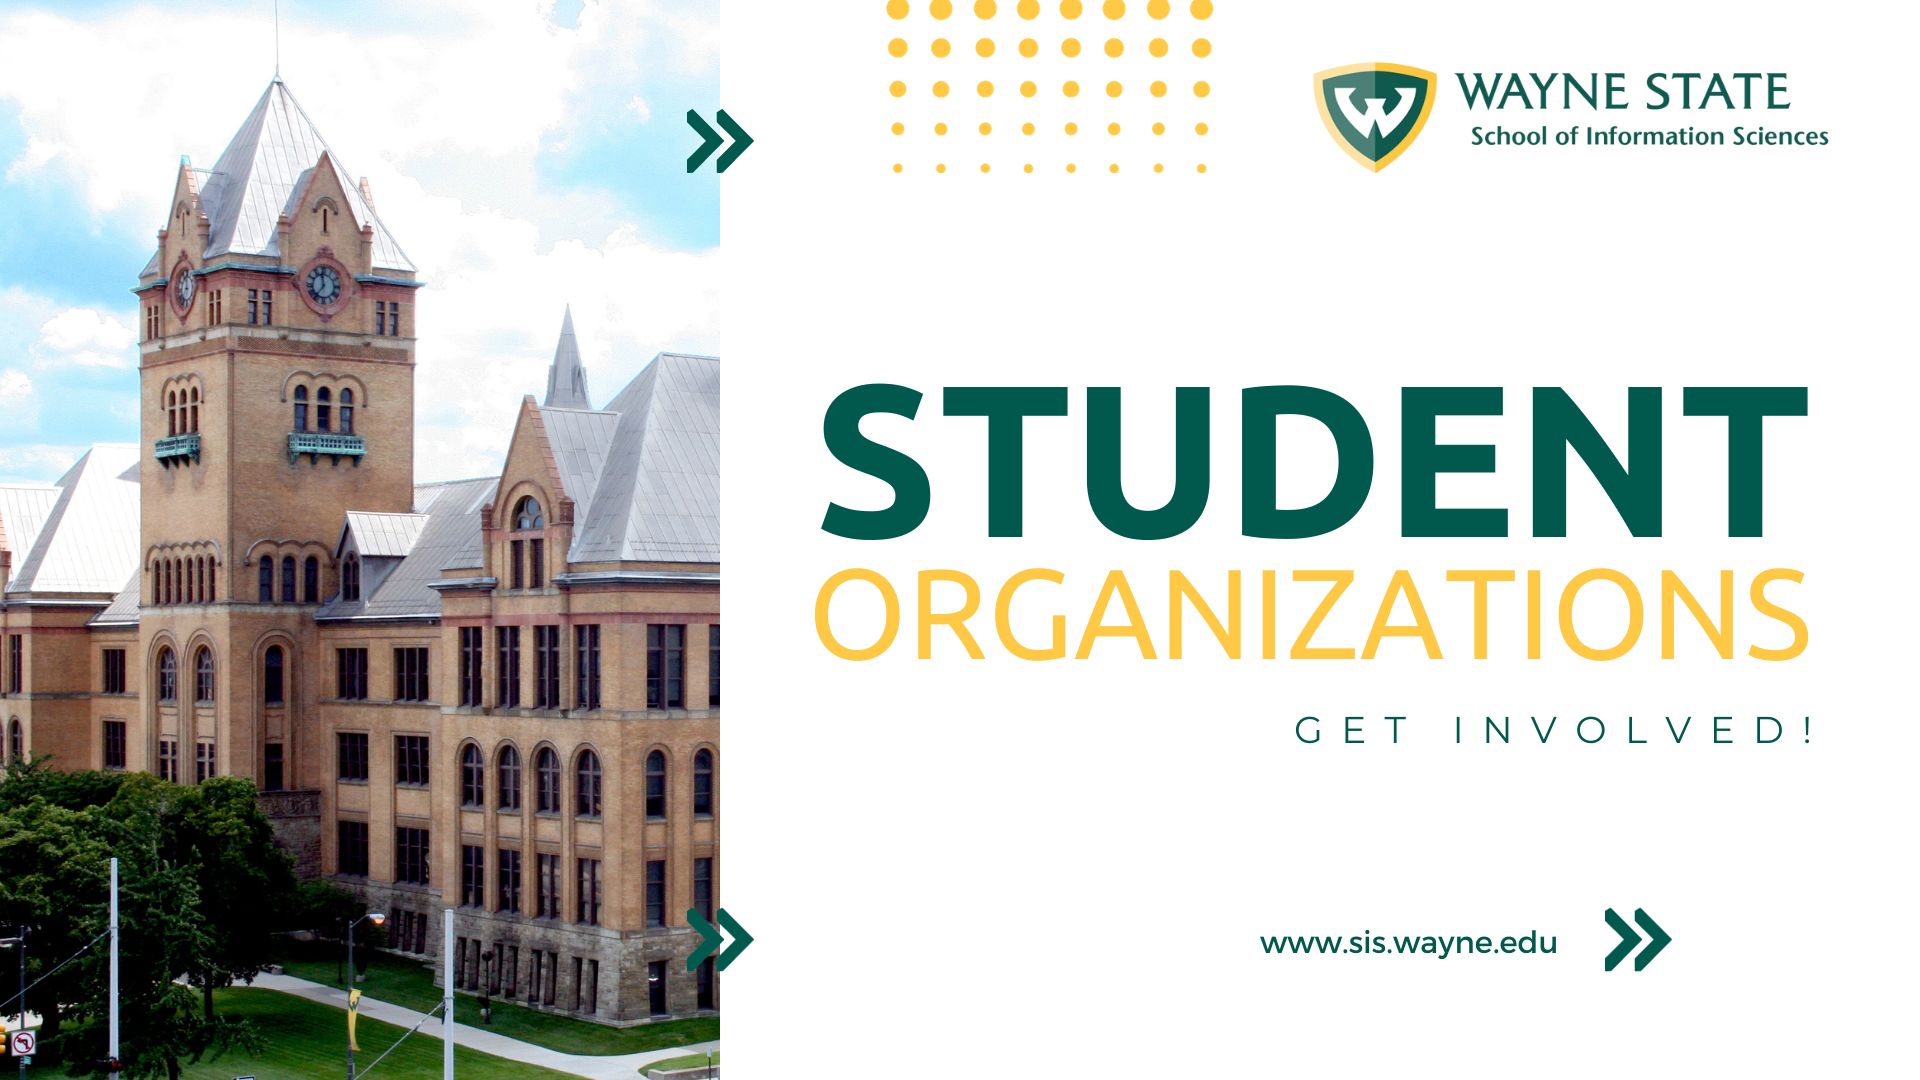 Student organization presentation home page